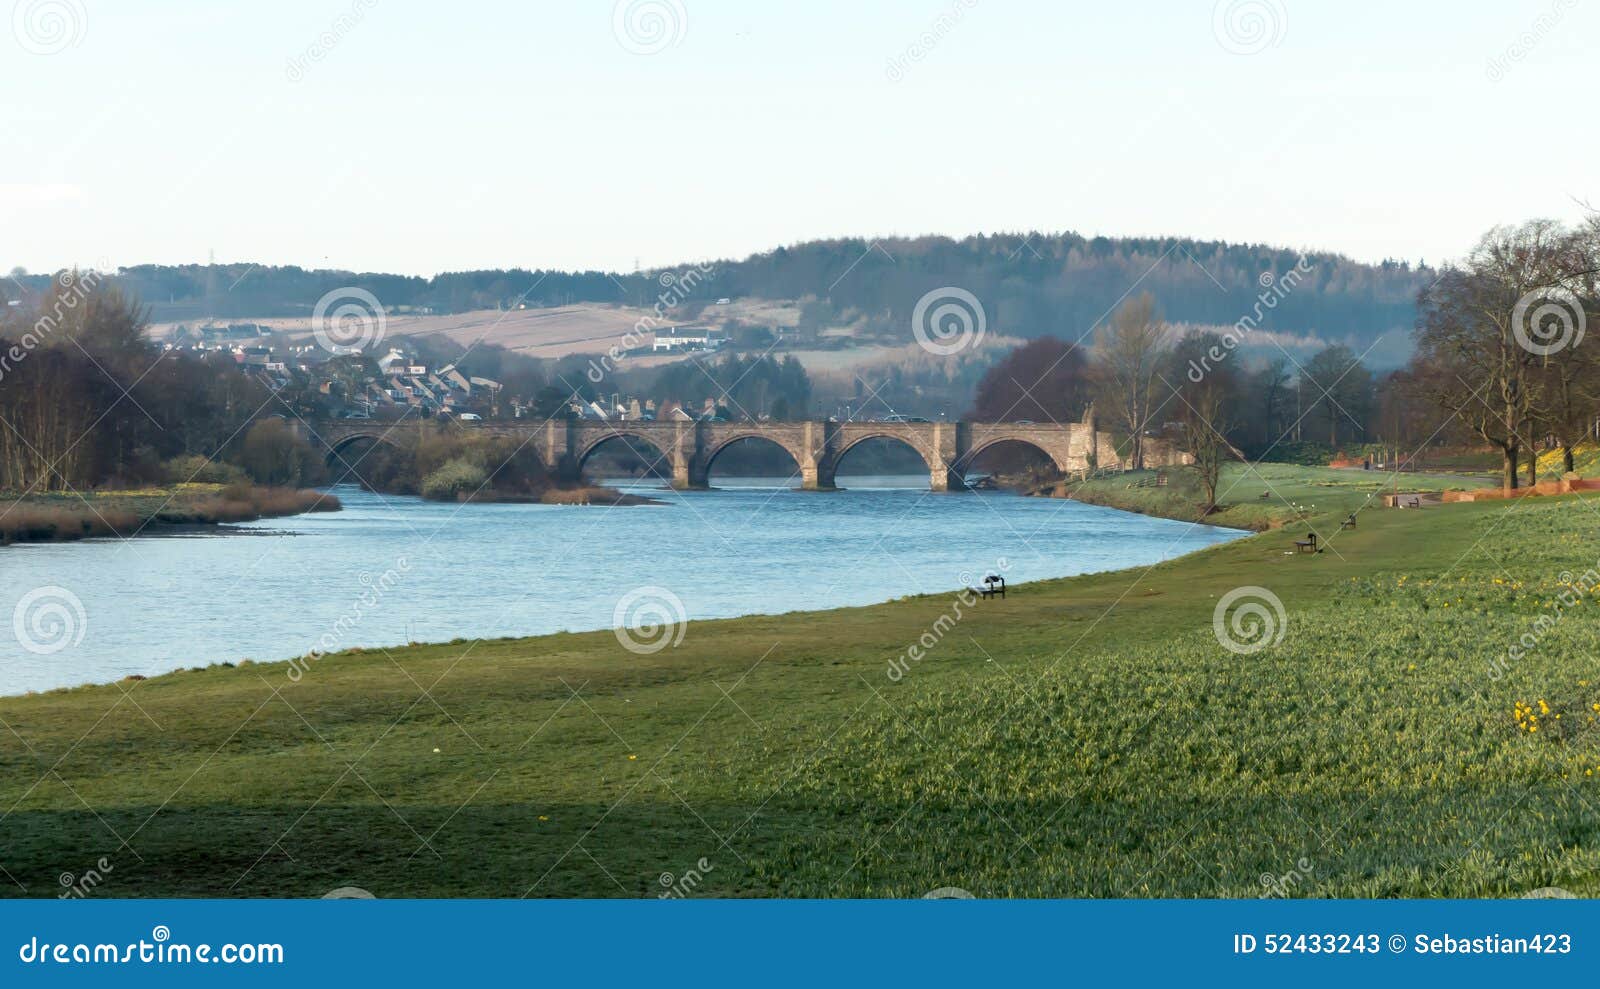 bridge of dee, aberdeen, scotland